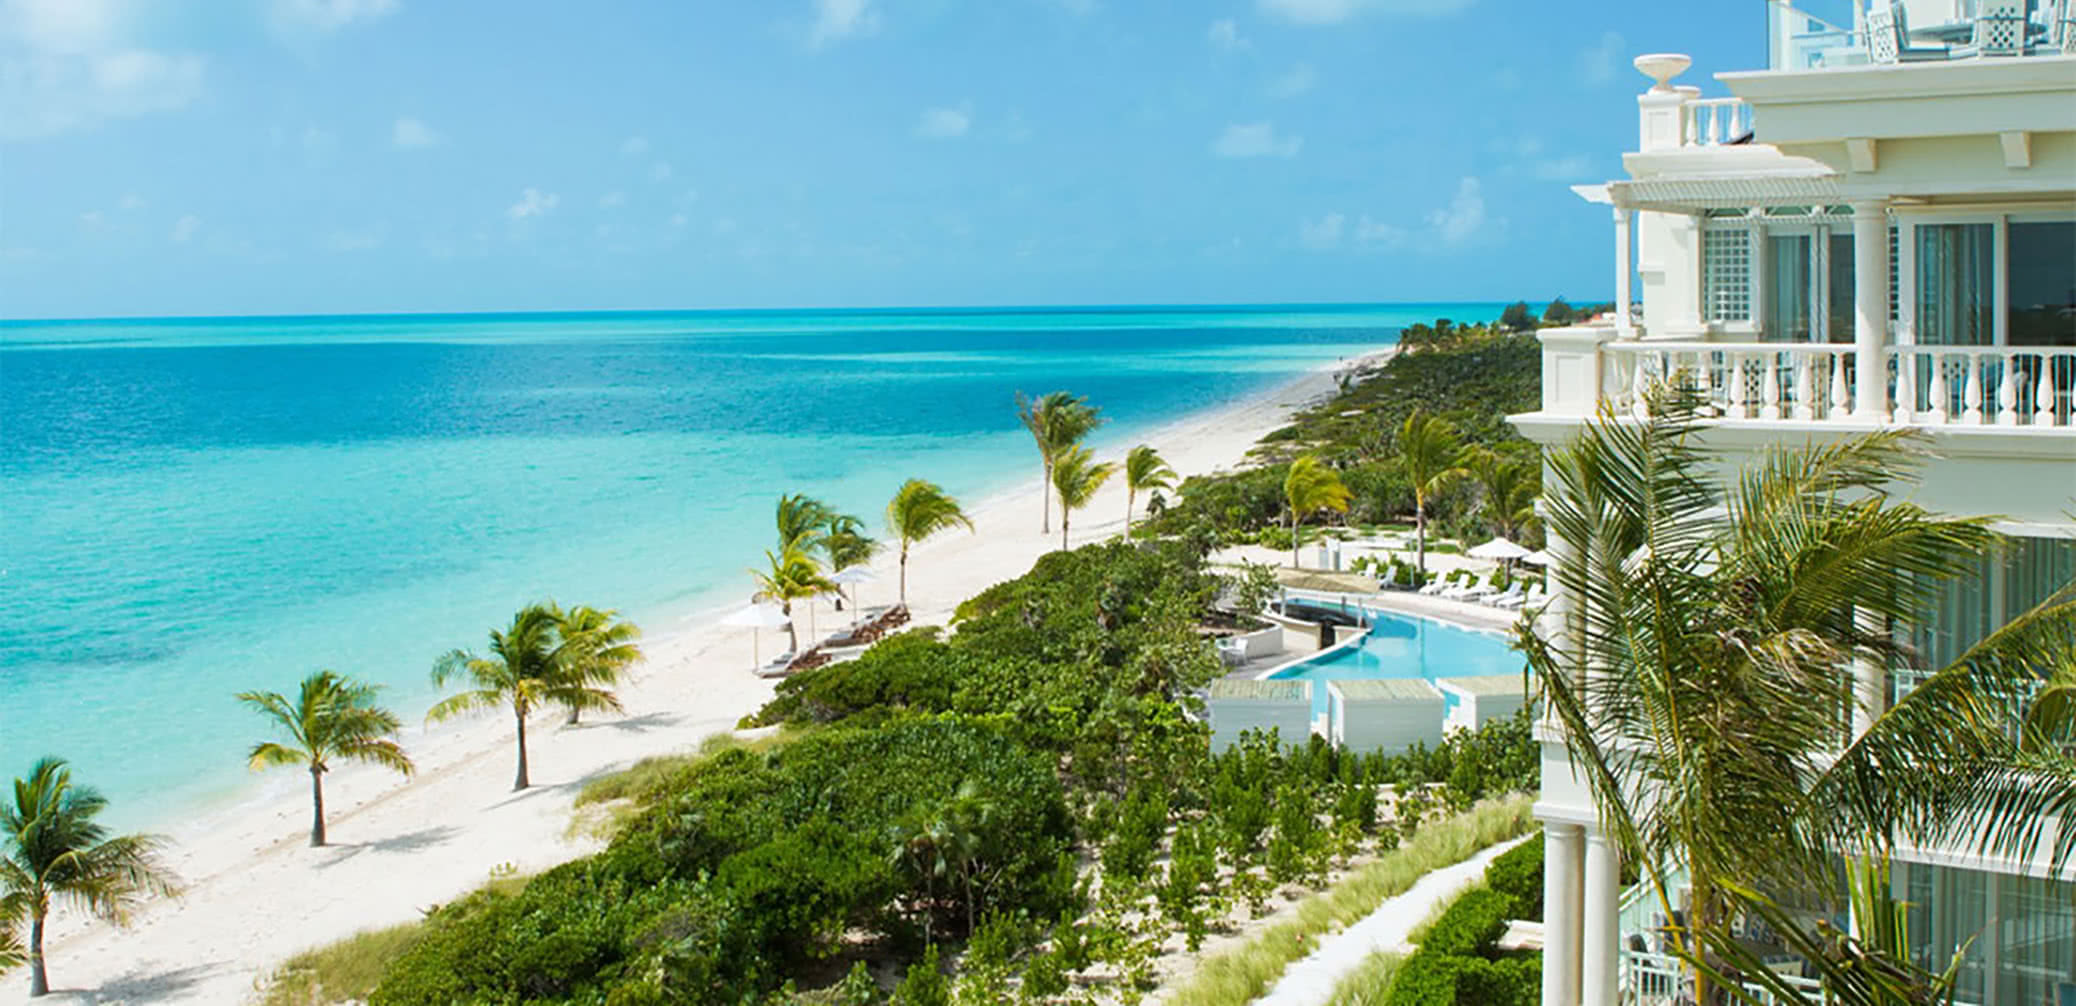 The Shore Club Vs. Ritz-Carlton Turks & Caicos Vs Amanyara: Which Is Best?